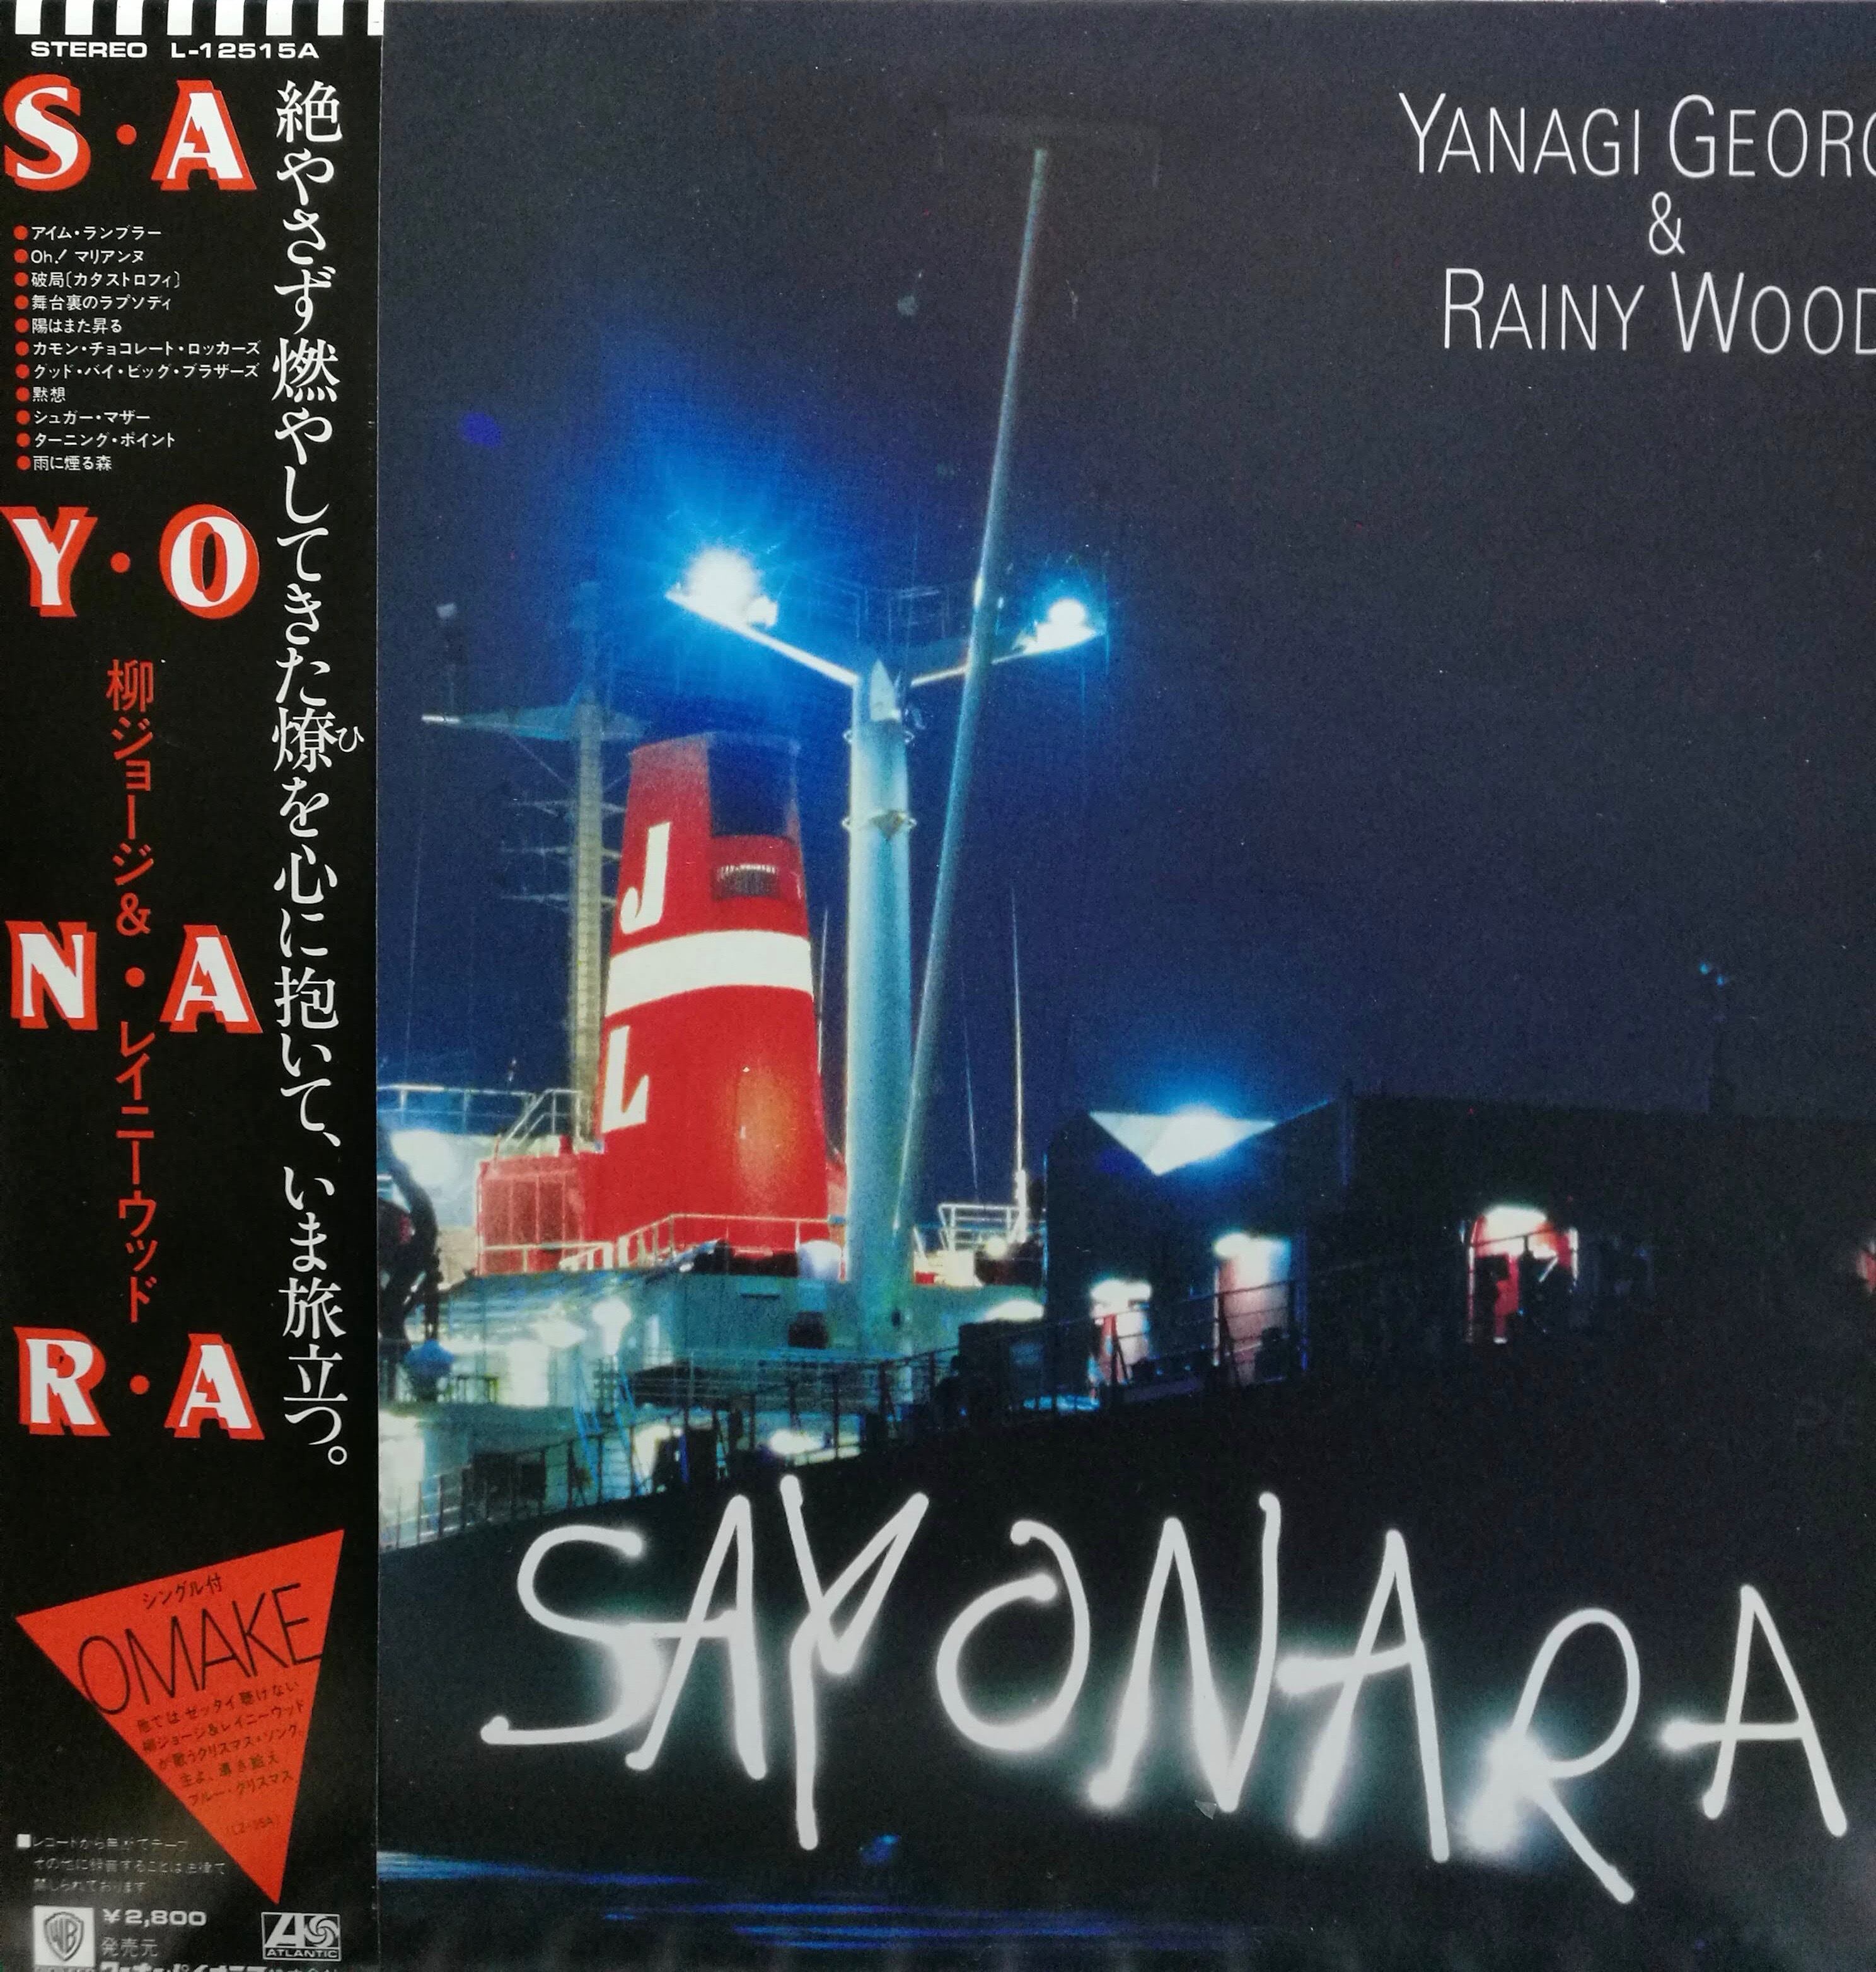 LP】柳ジョージ & Rainy Wood / Sayonara | COMPACT DISCO ASIA